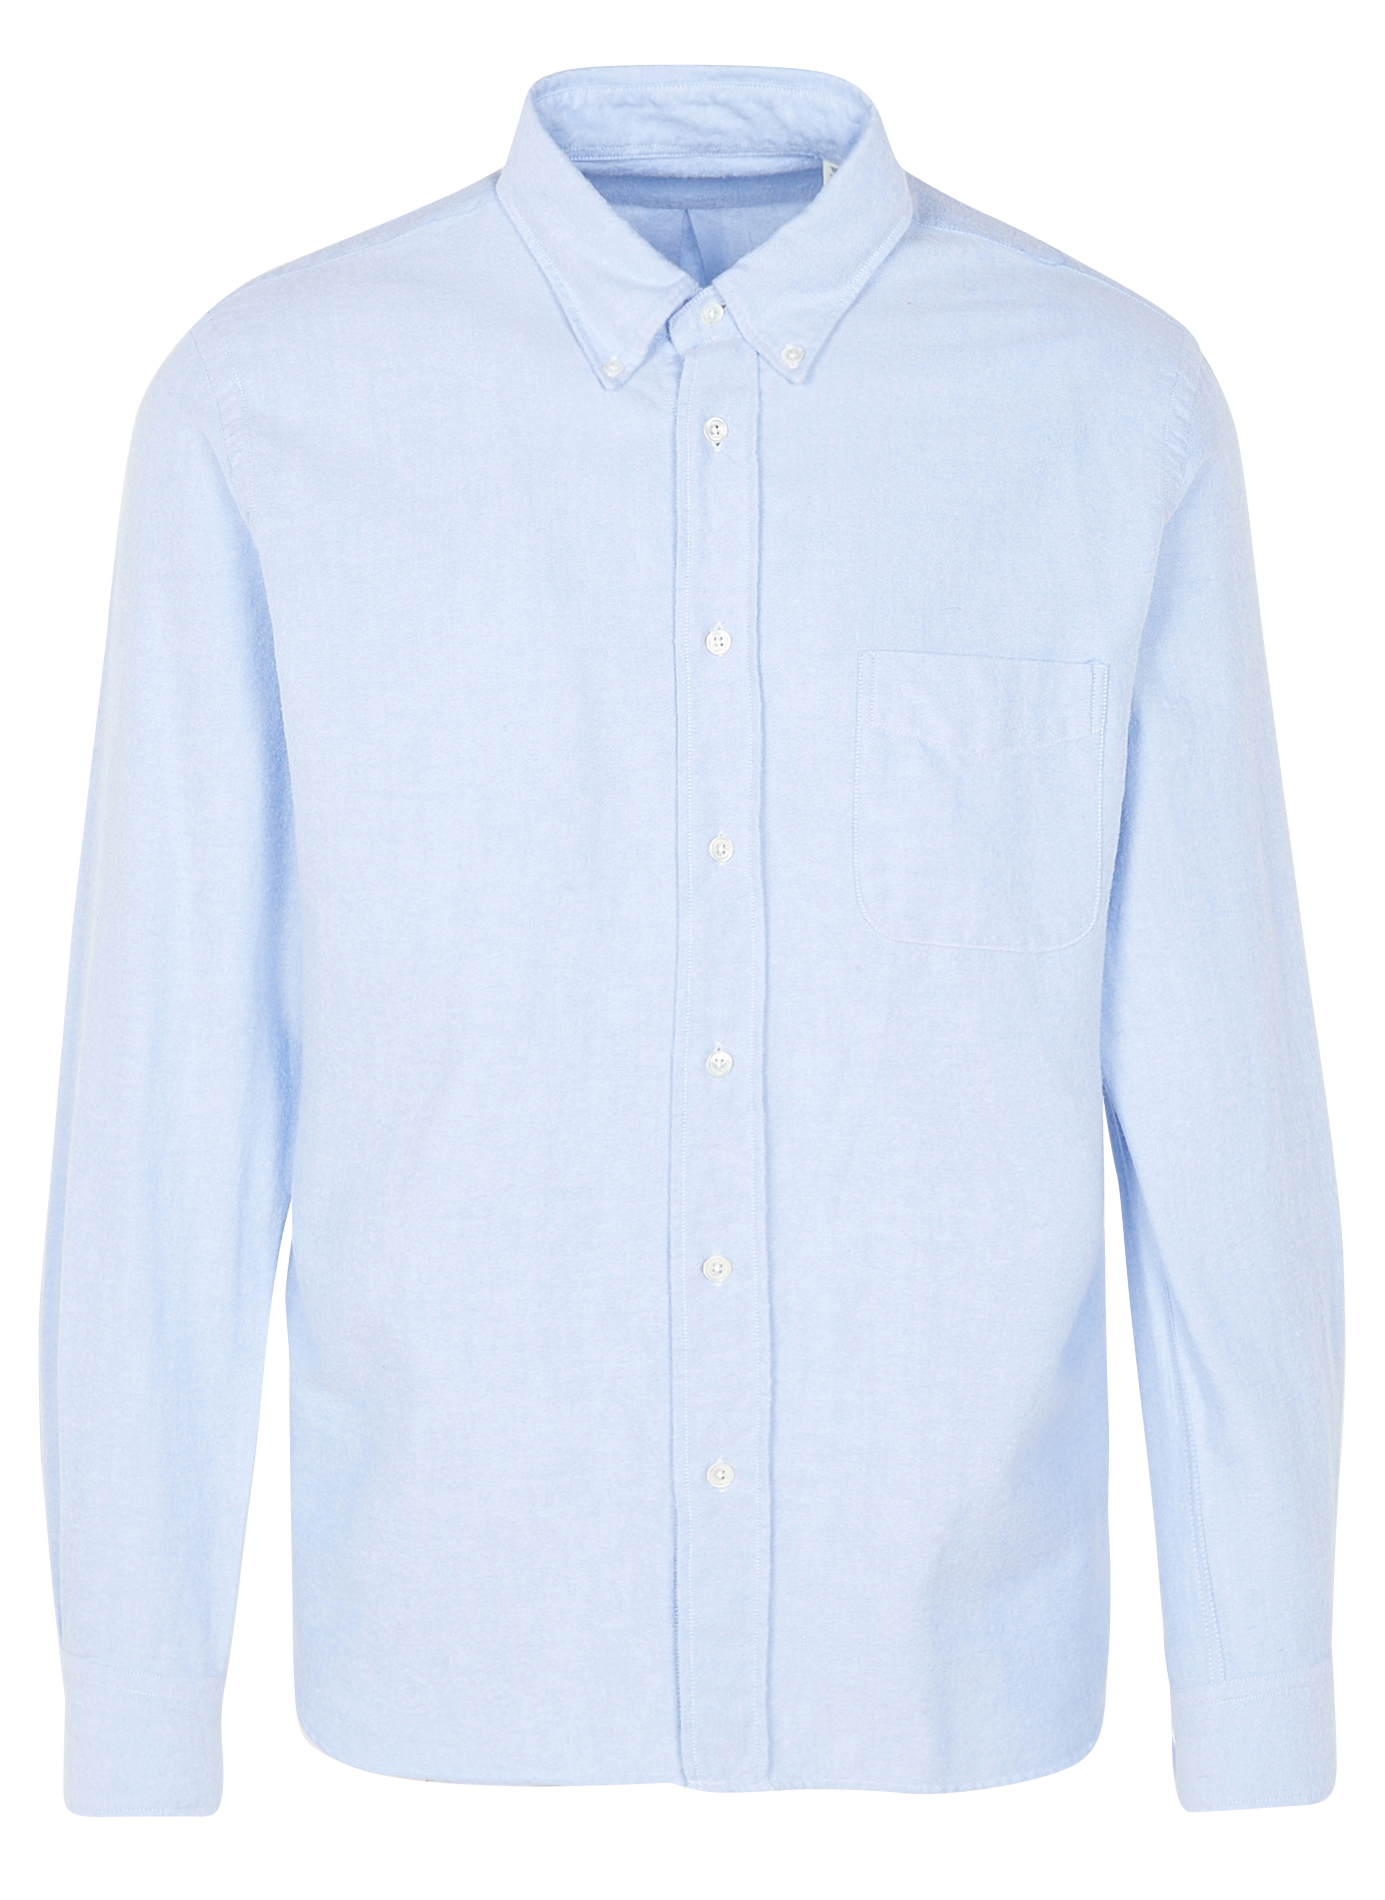 sconto 91% MODA UOMO Camicie & T-shirt Custom fit Blu navy/Rosso M The Kooples Camicia 